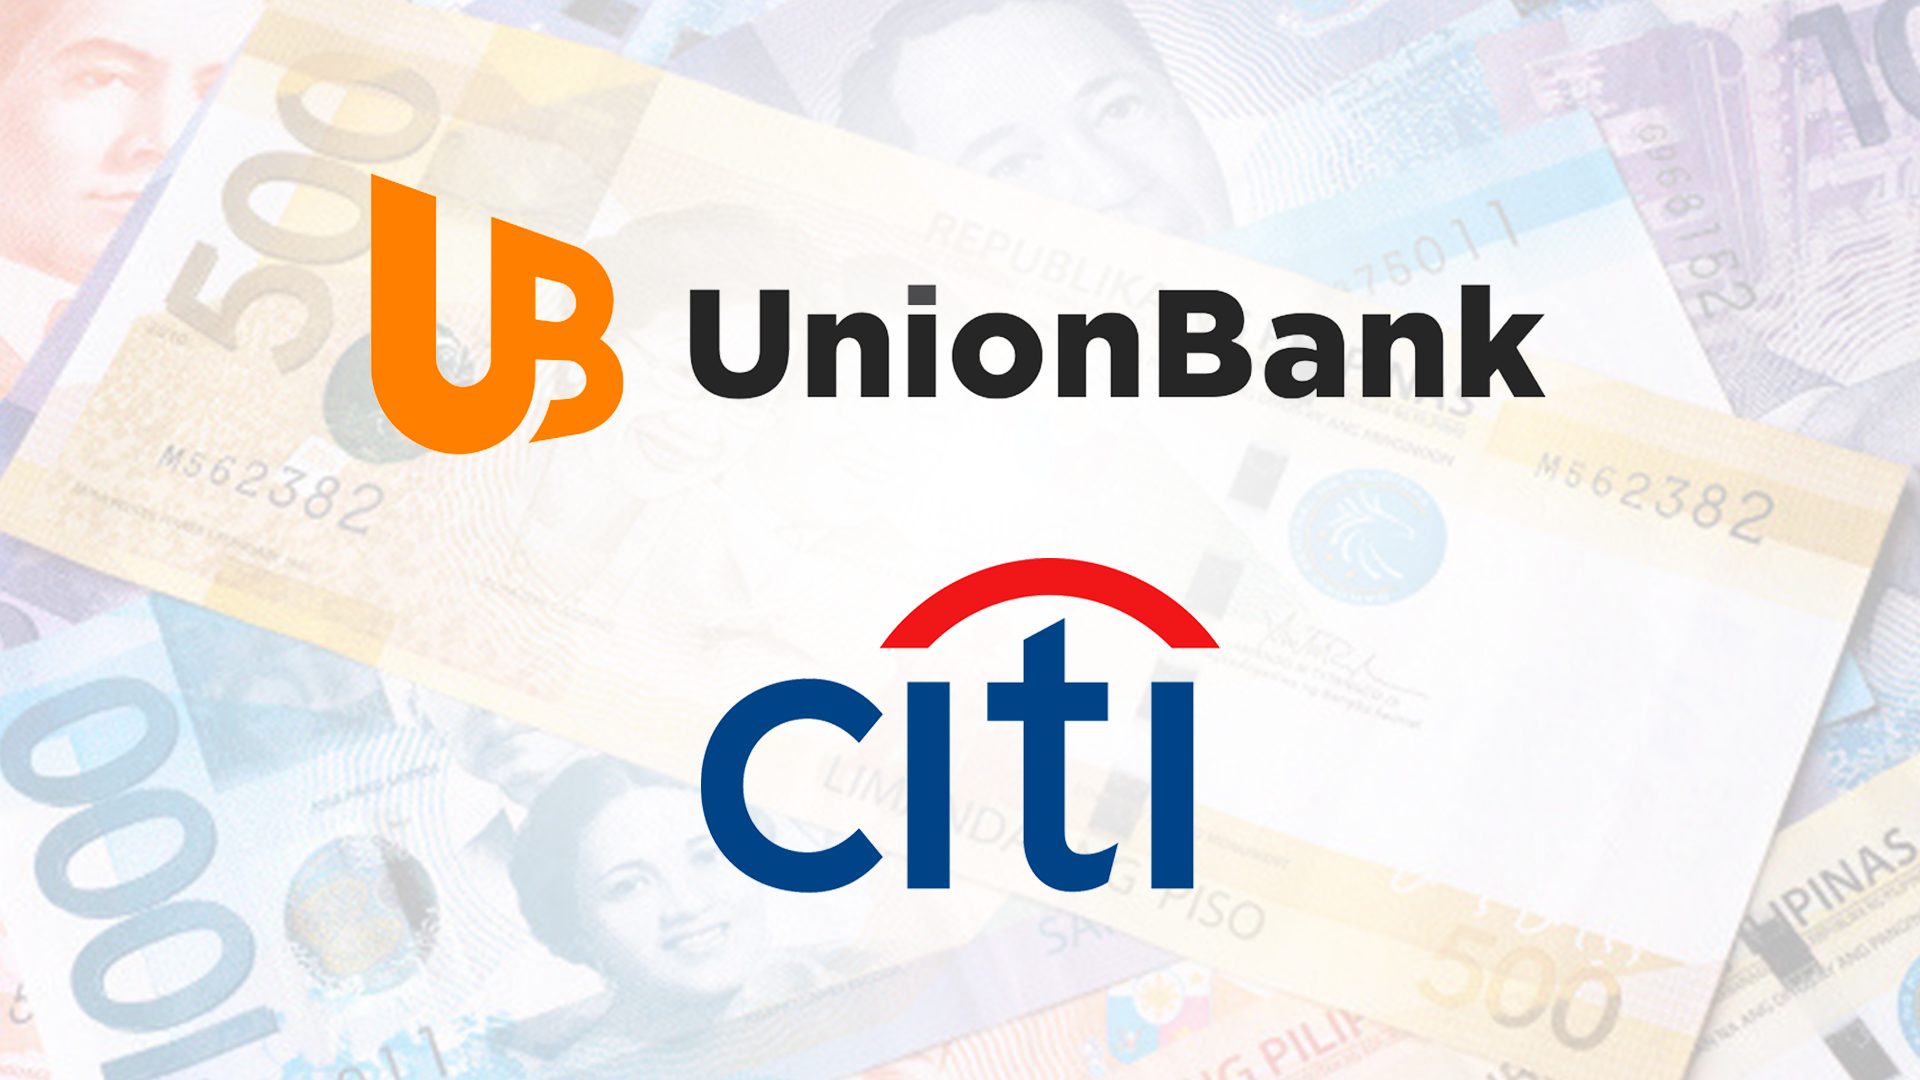 UnionBank buys Citi Philippines’ consumer banking business for P55 billion